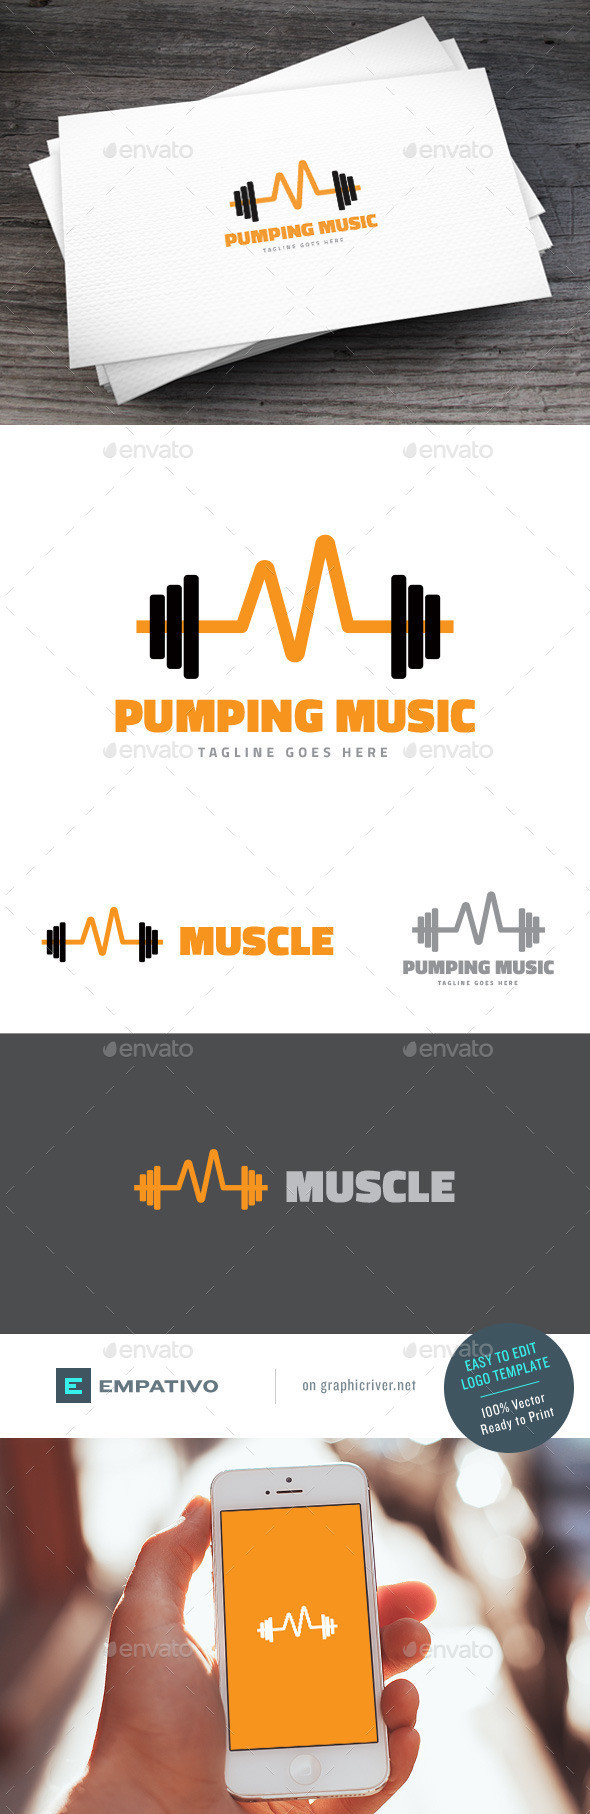 Pumping music logo template